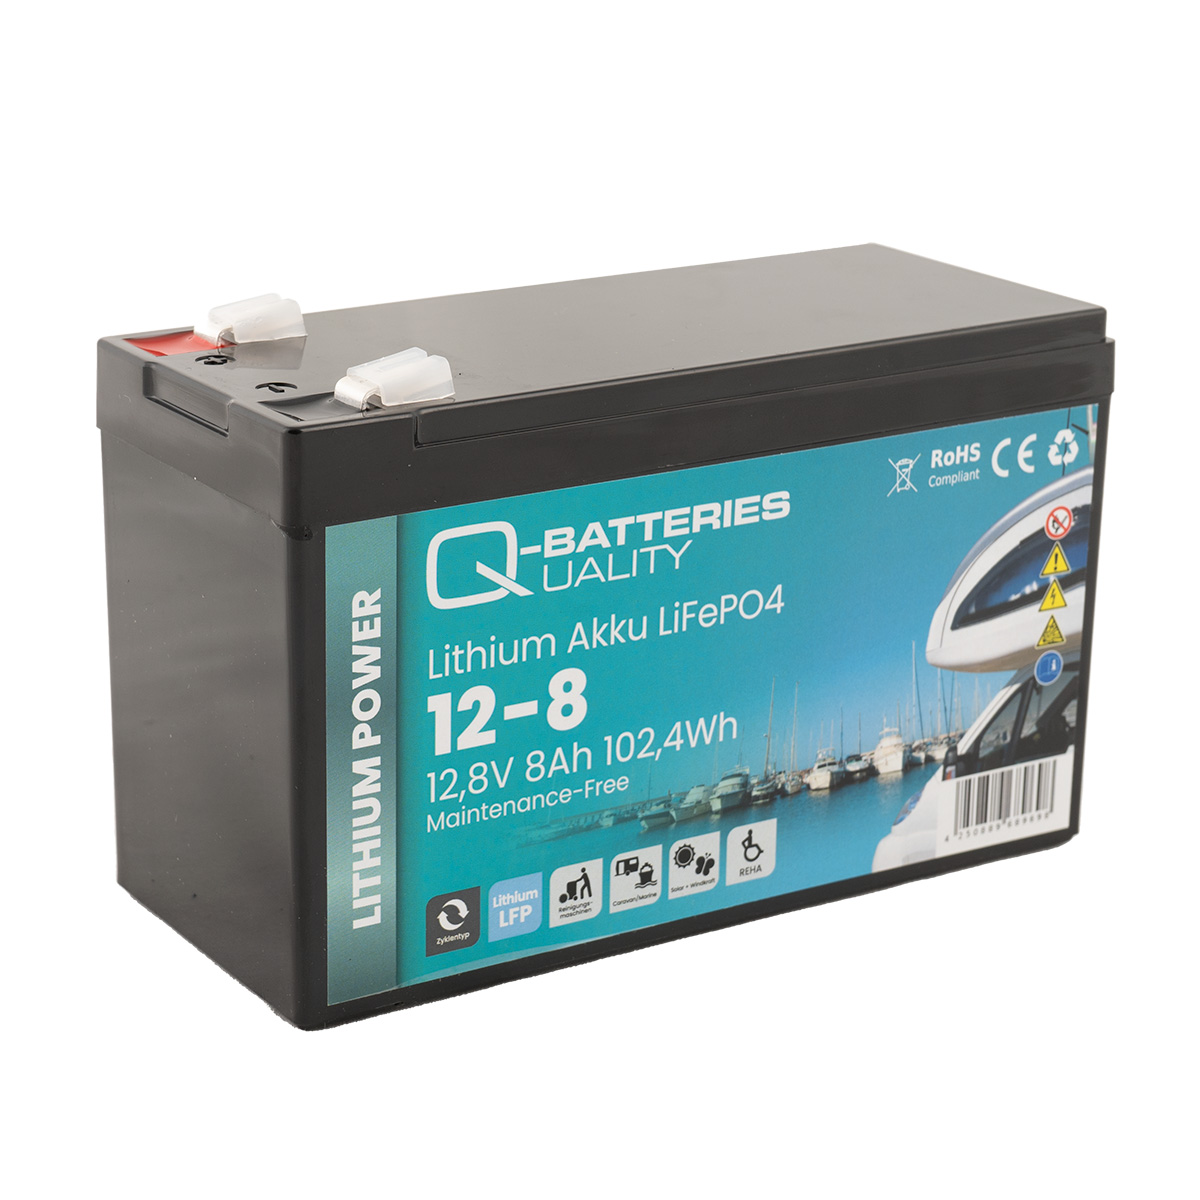 Q-Batteries Lithium Akku 12-8 12,8V 8Ah 102,4Wh LiFePO4 Batterie  